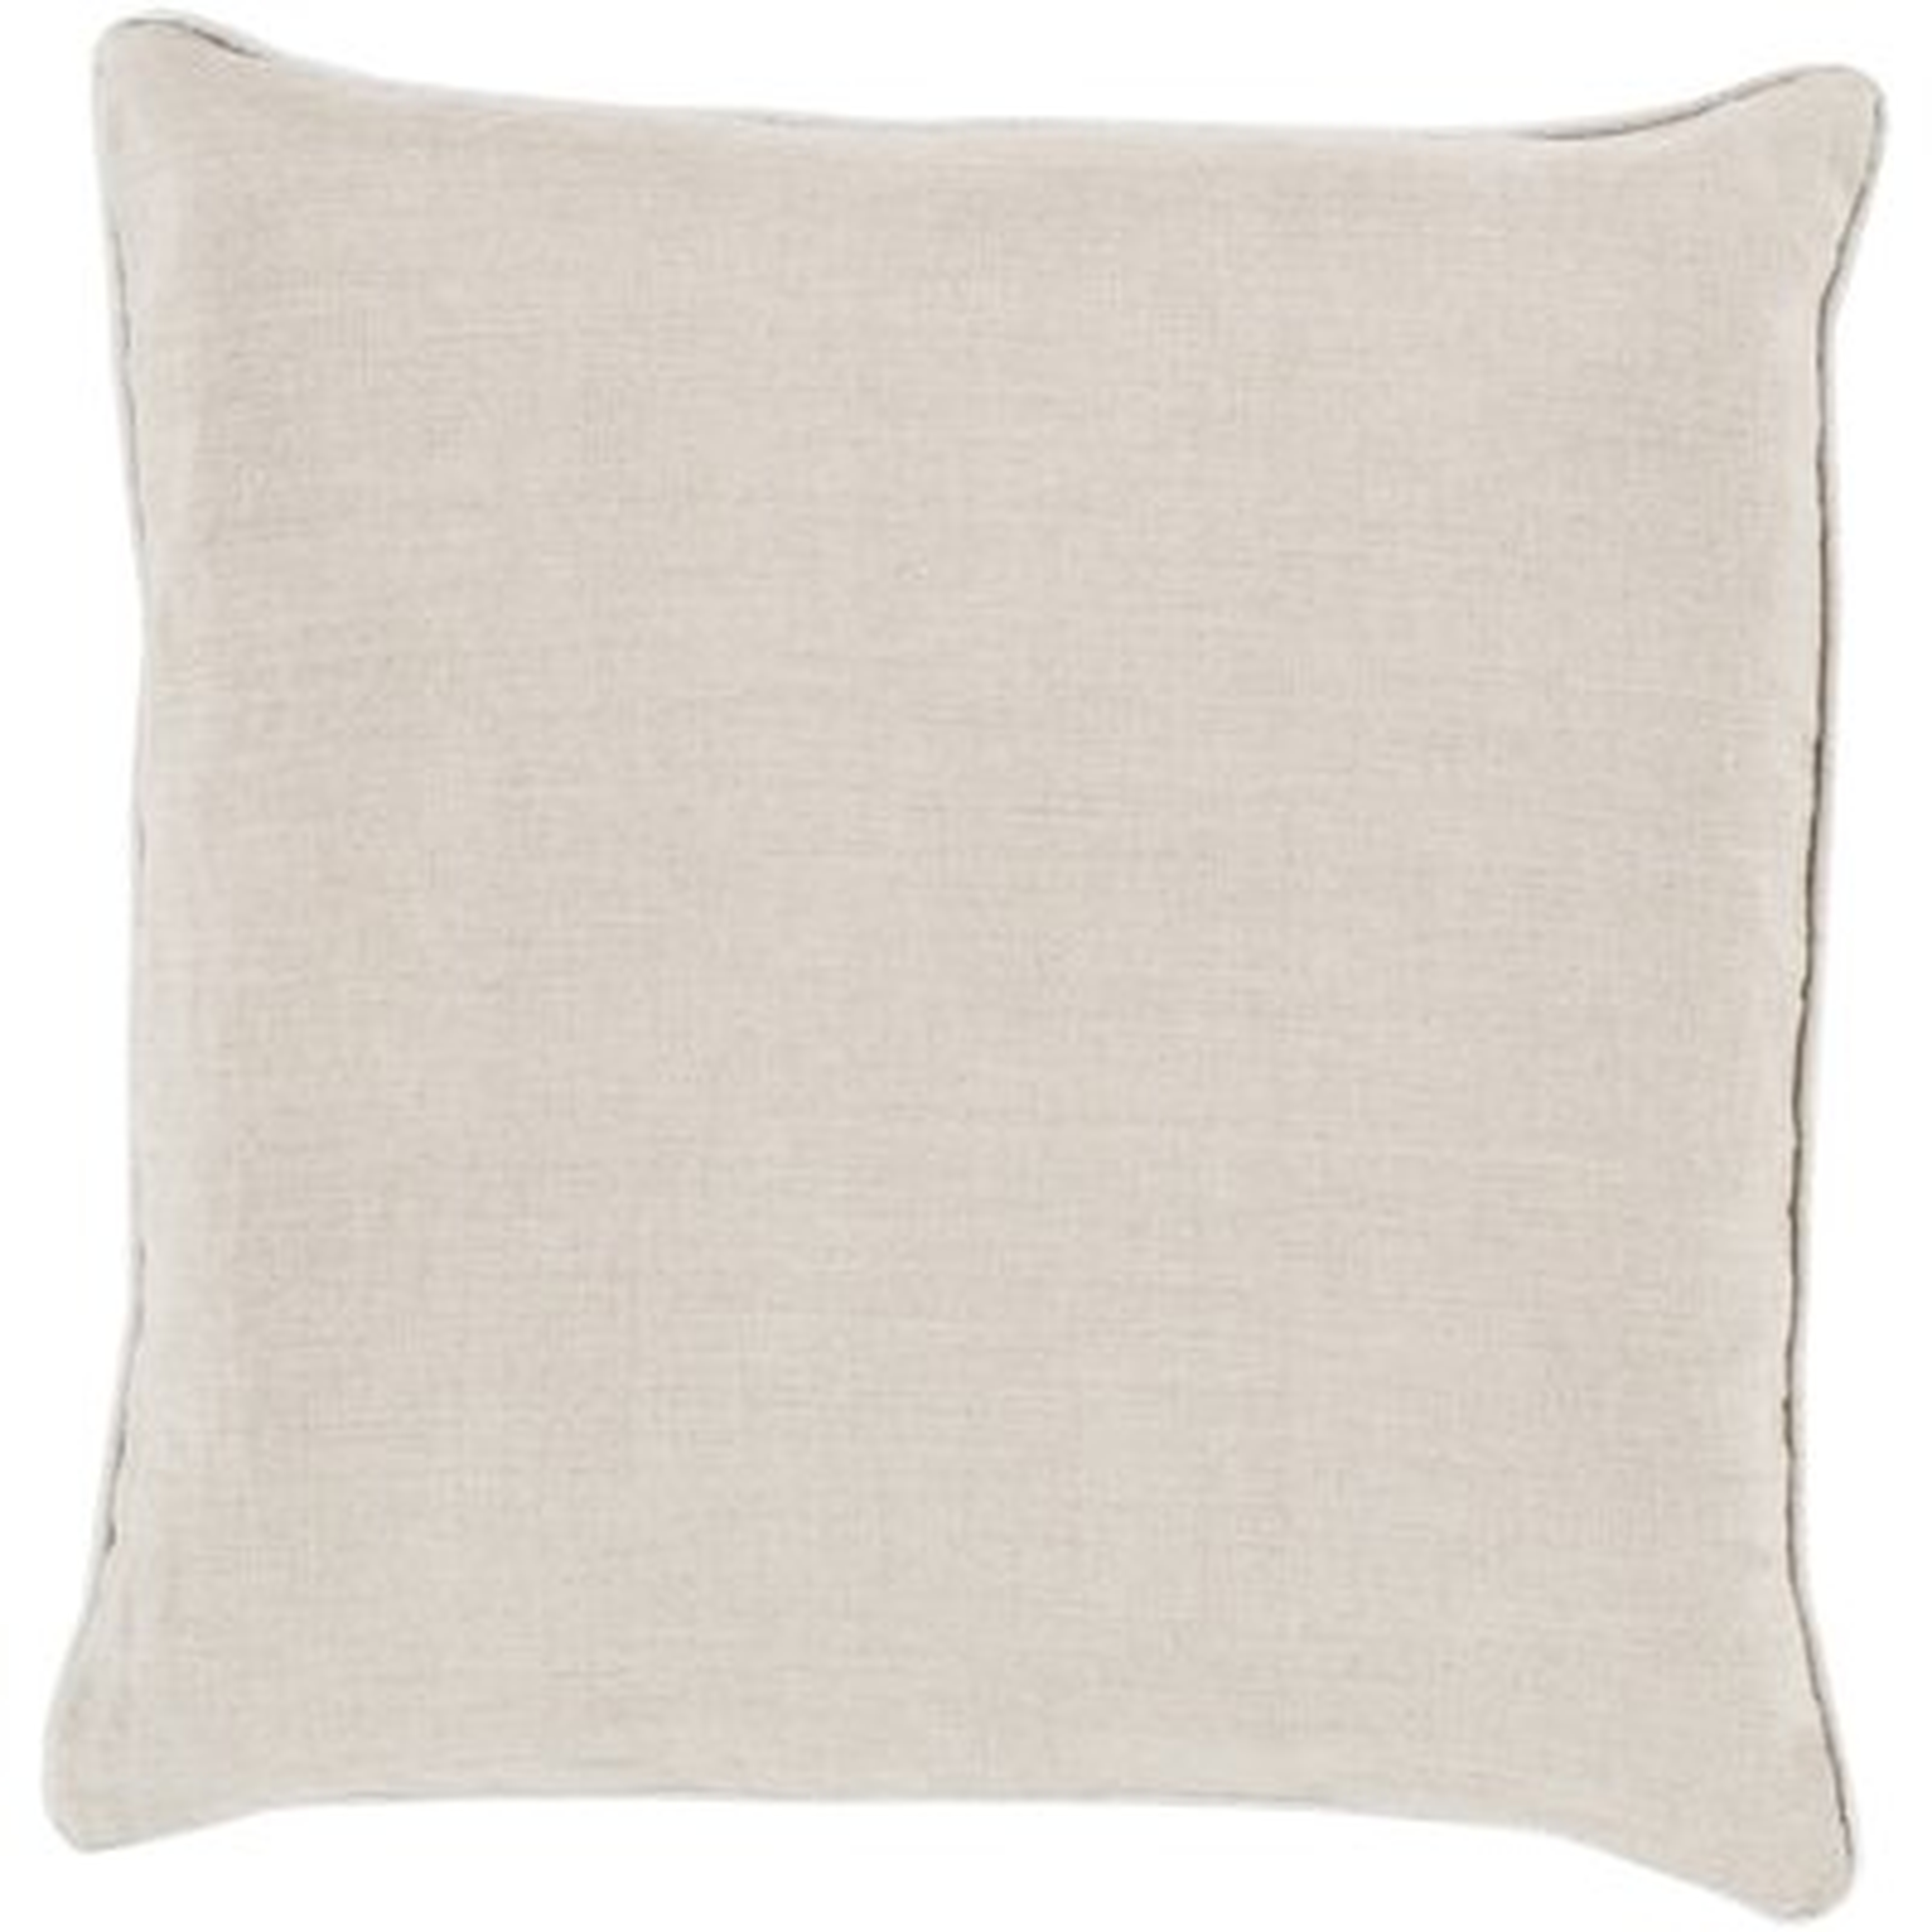 Aamena Square Linen Pillow Cover - Wayfair